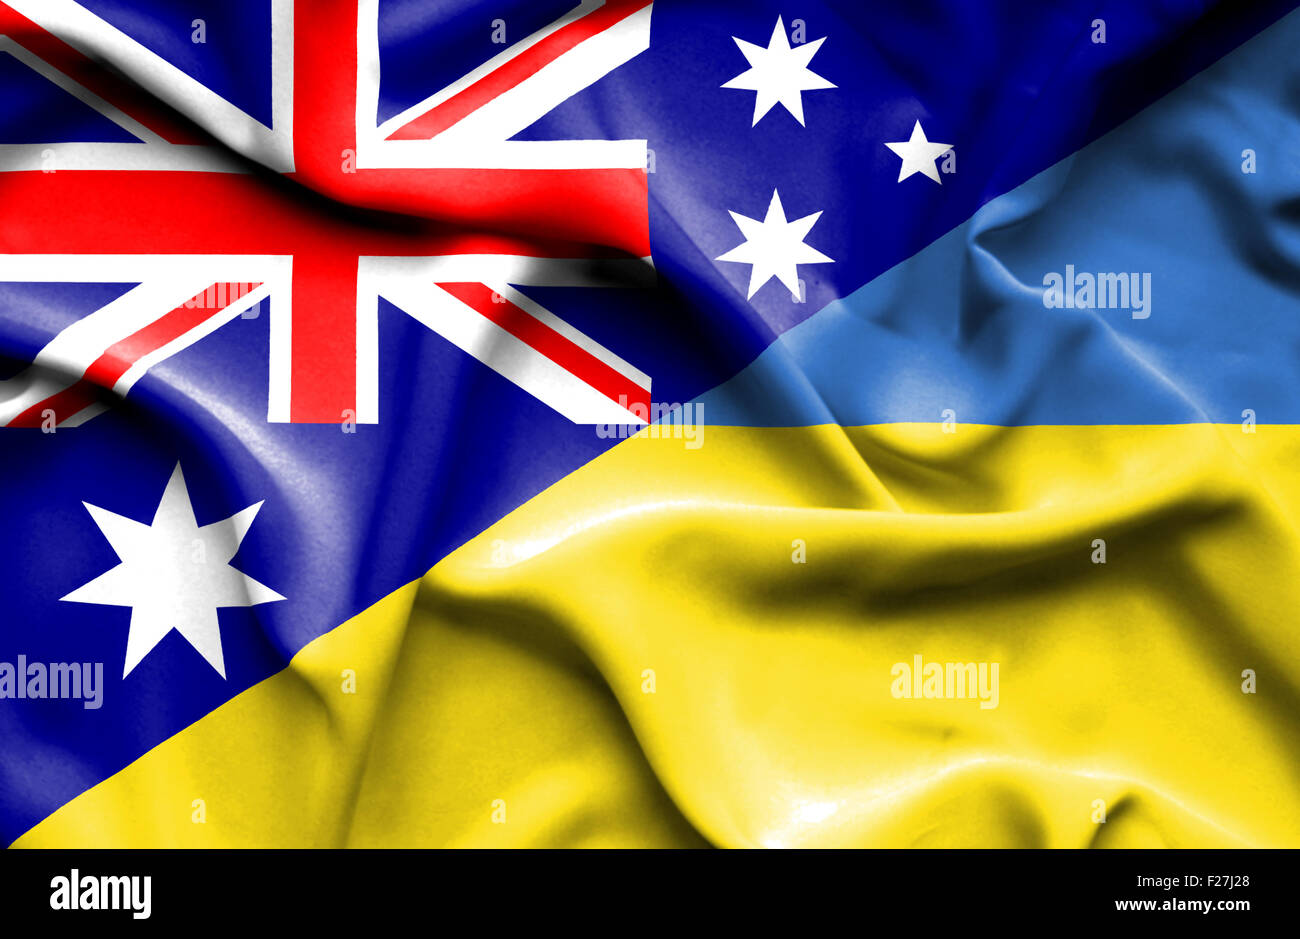 Waving flag of Ukraine and Stock Photo